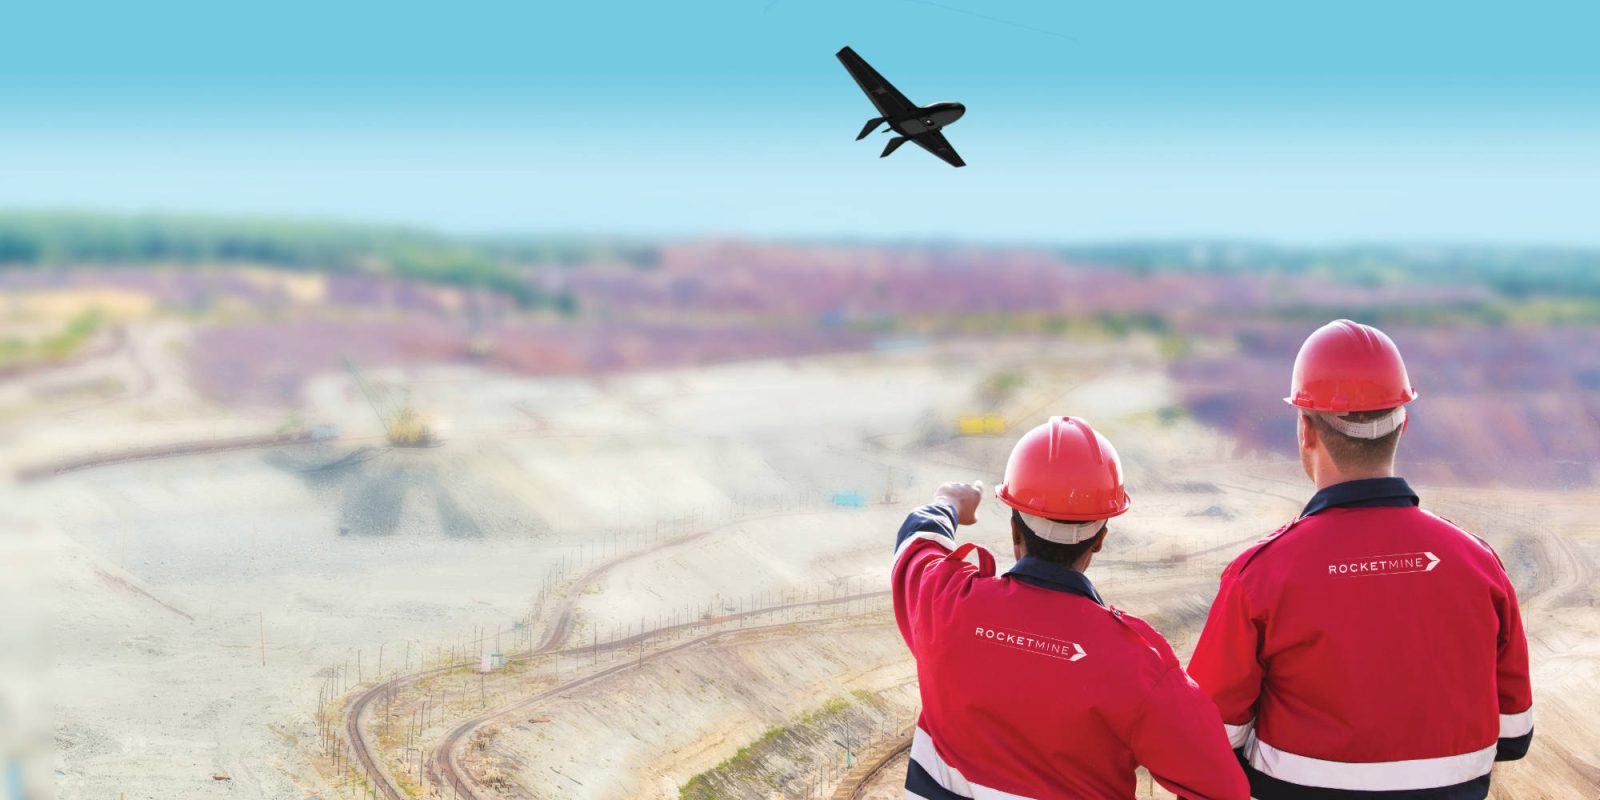 Delta Drone mining contract